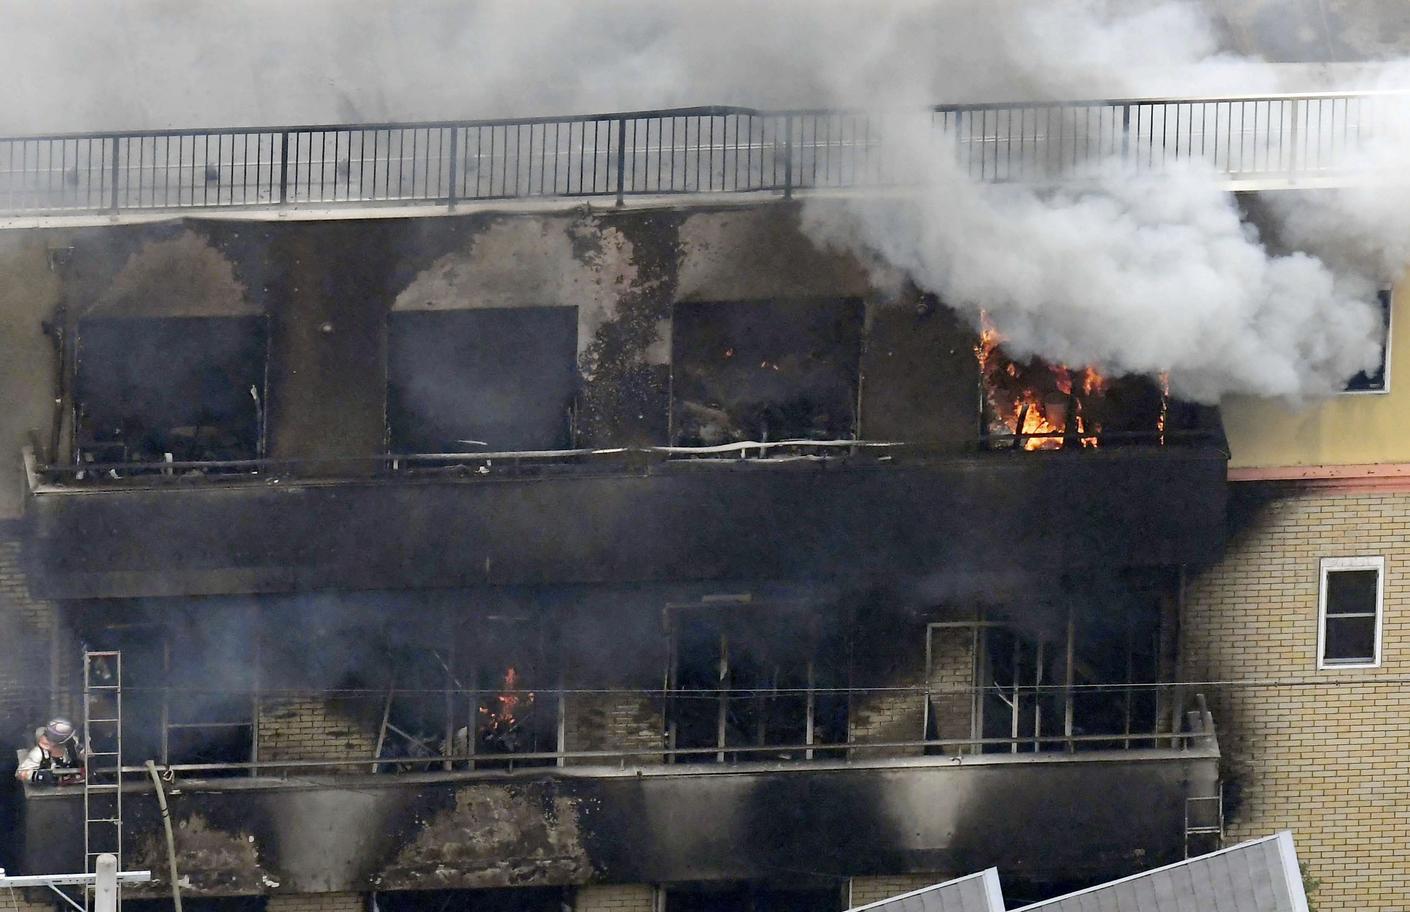 'Appalling' arson attack on Japanese animation studio kills at least 33